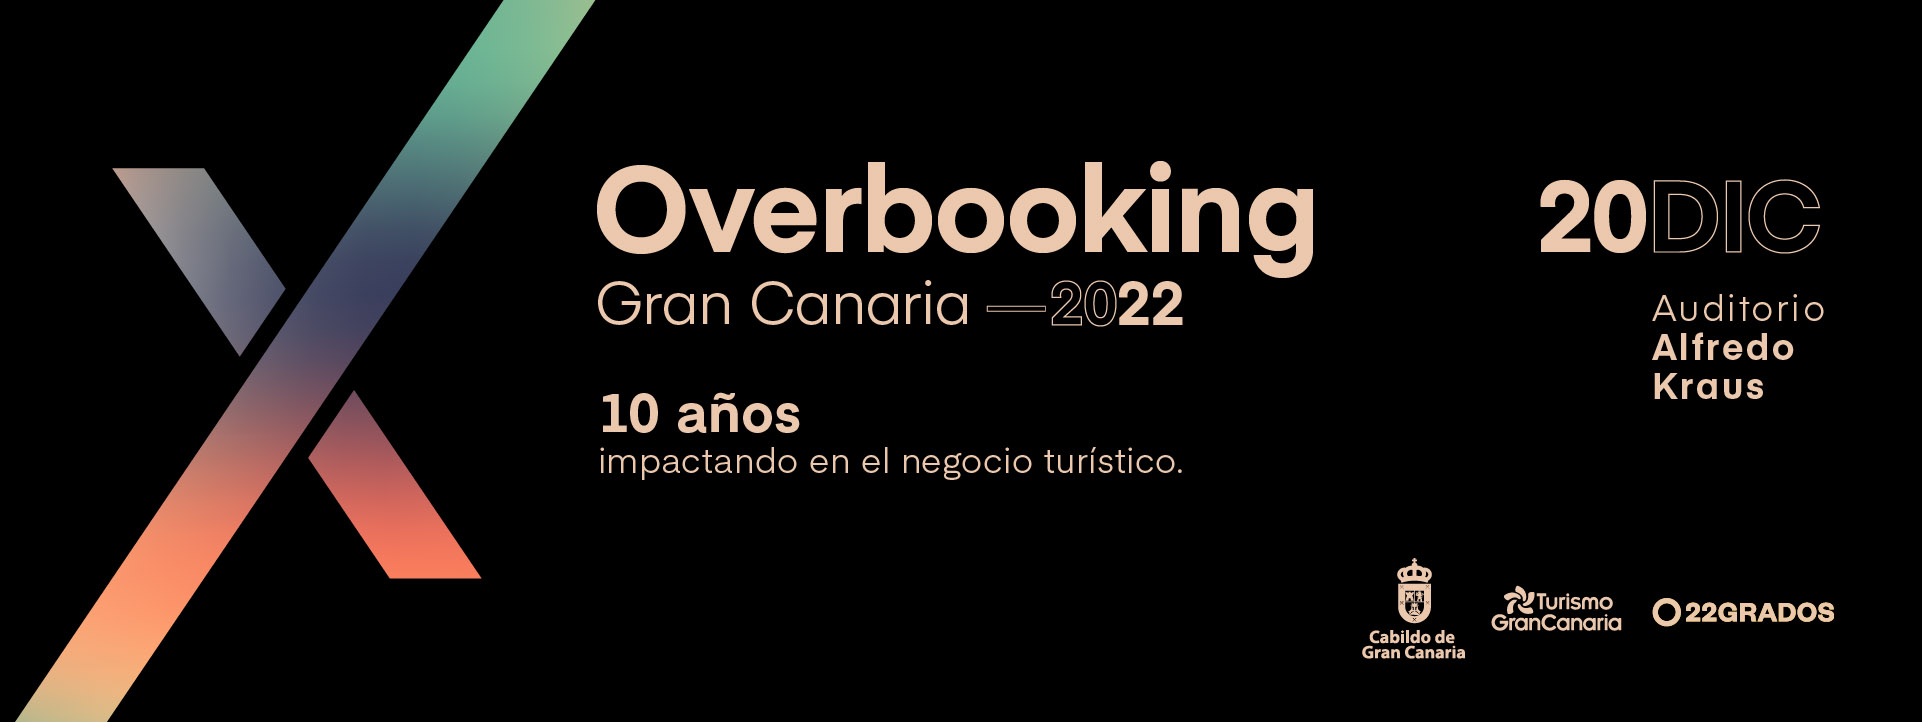 Overbooking Gran Canaria 2022